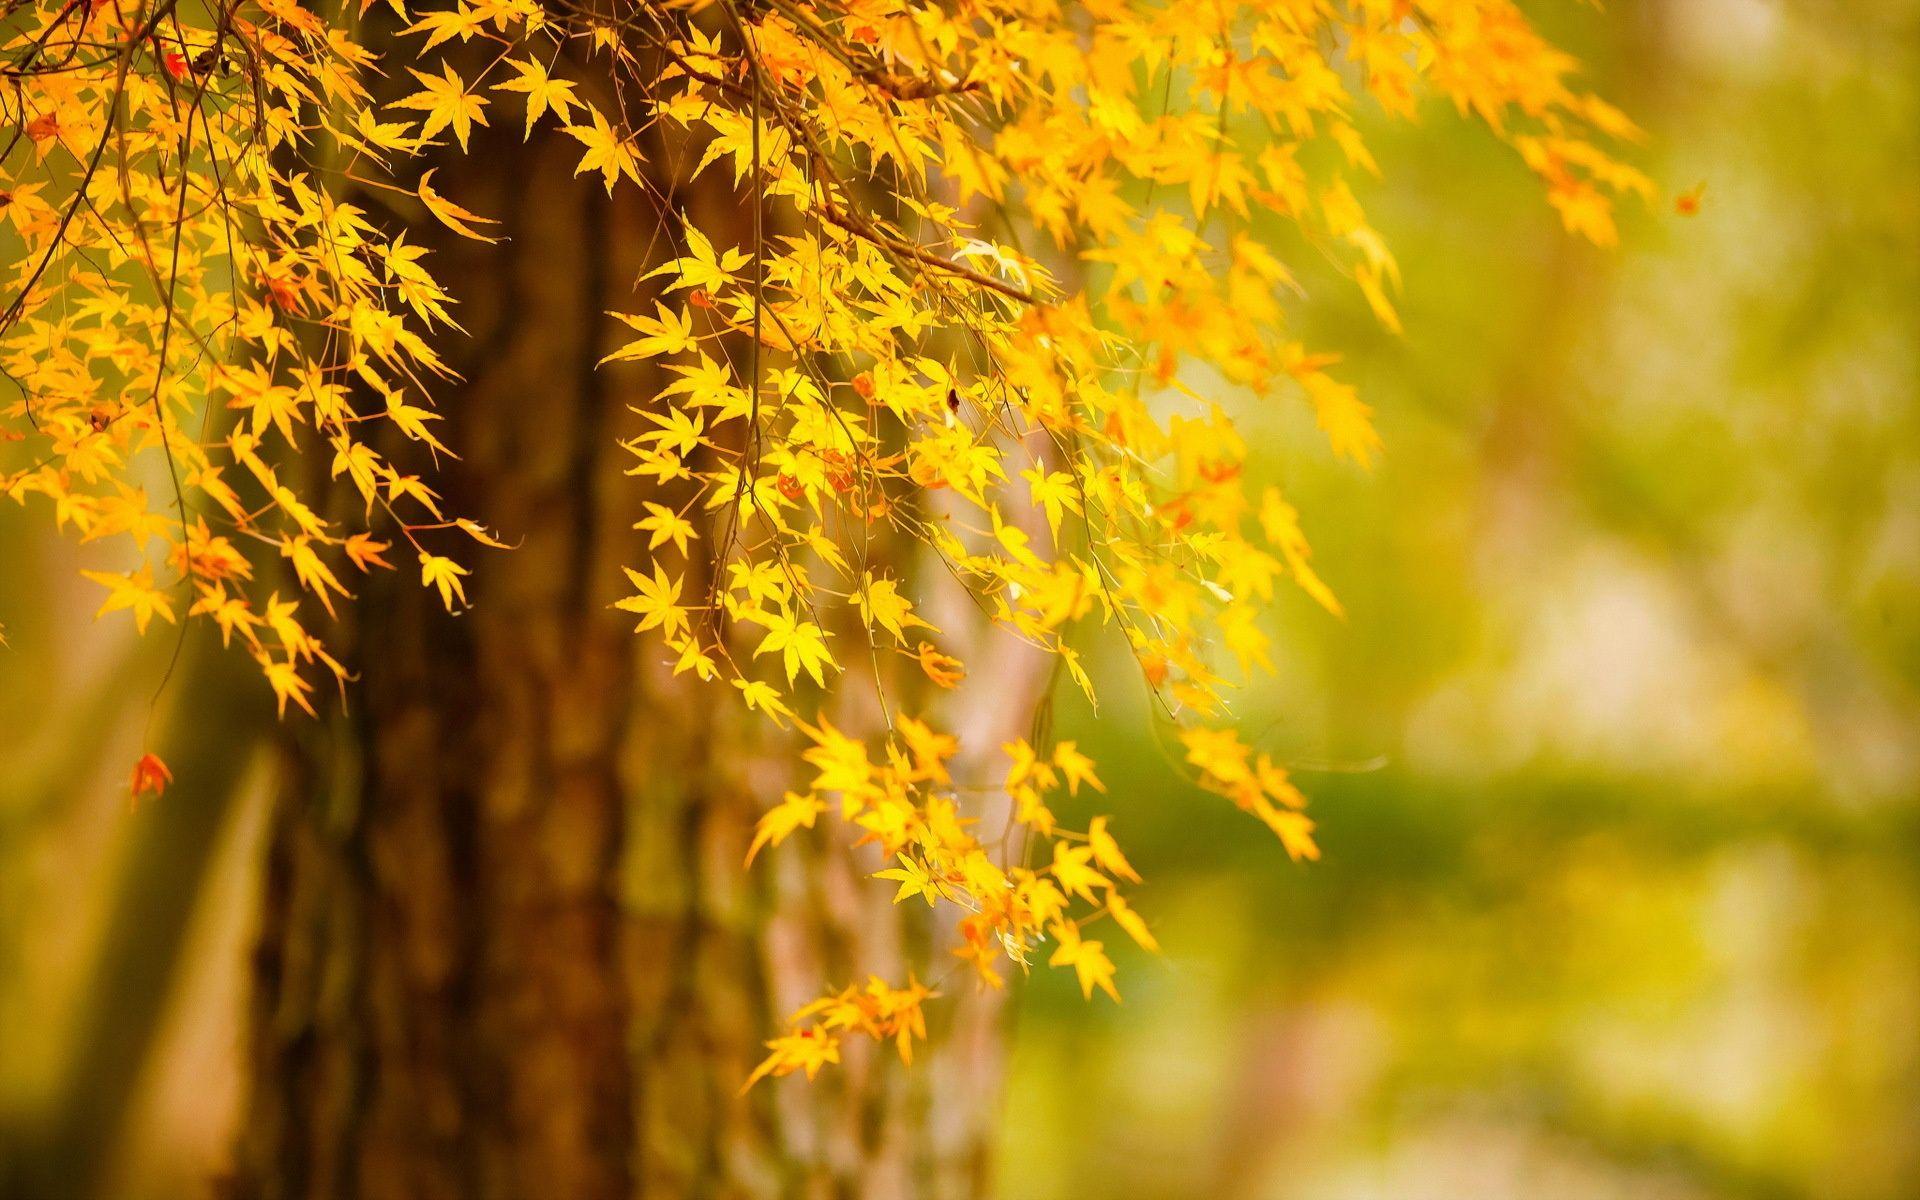 Autumn tree yellow leaves, nature scenery wallpaper